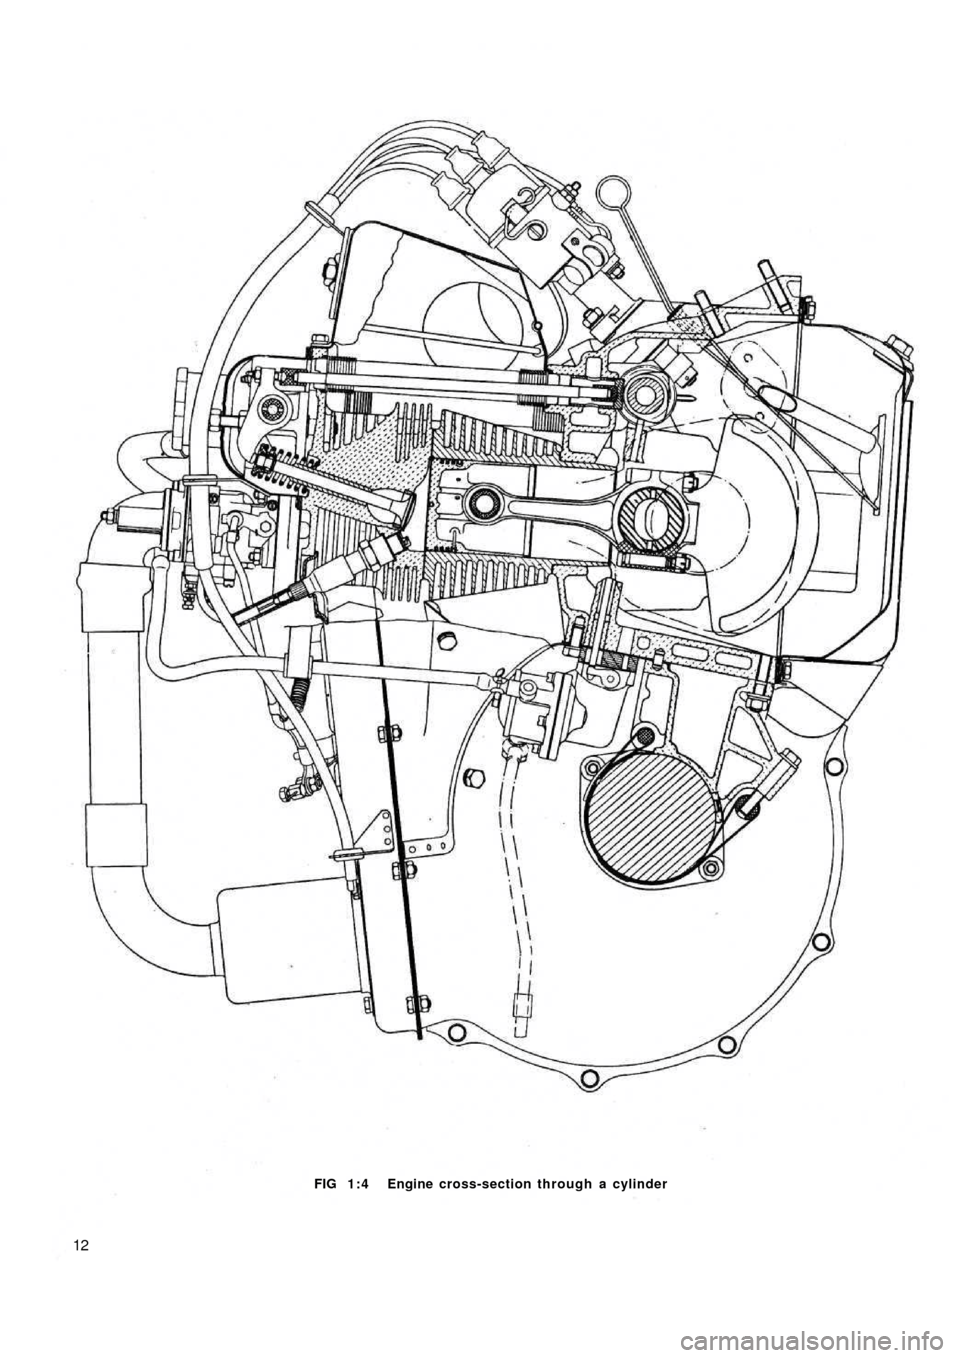 FIAT 500 1969 1.G Workshop Manual FIG 1 : 4  Engine cross-section through a cylinder
12 